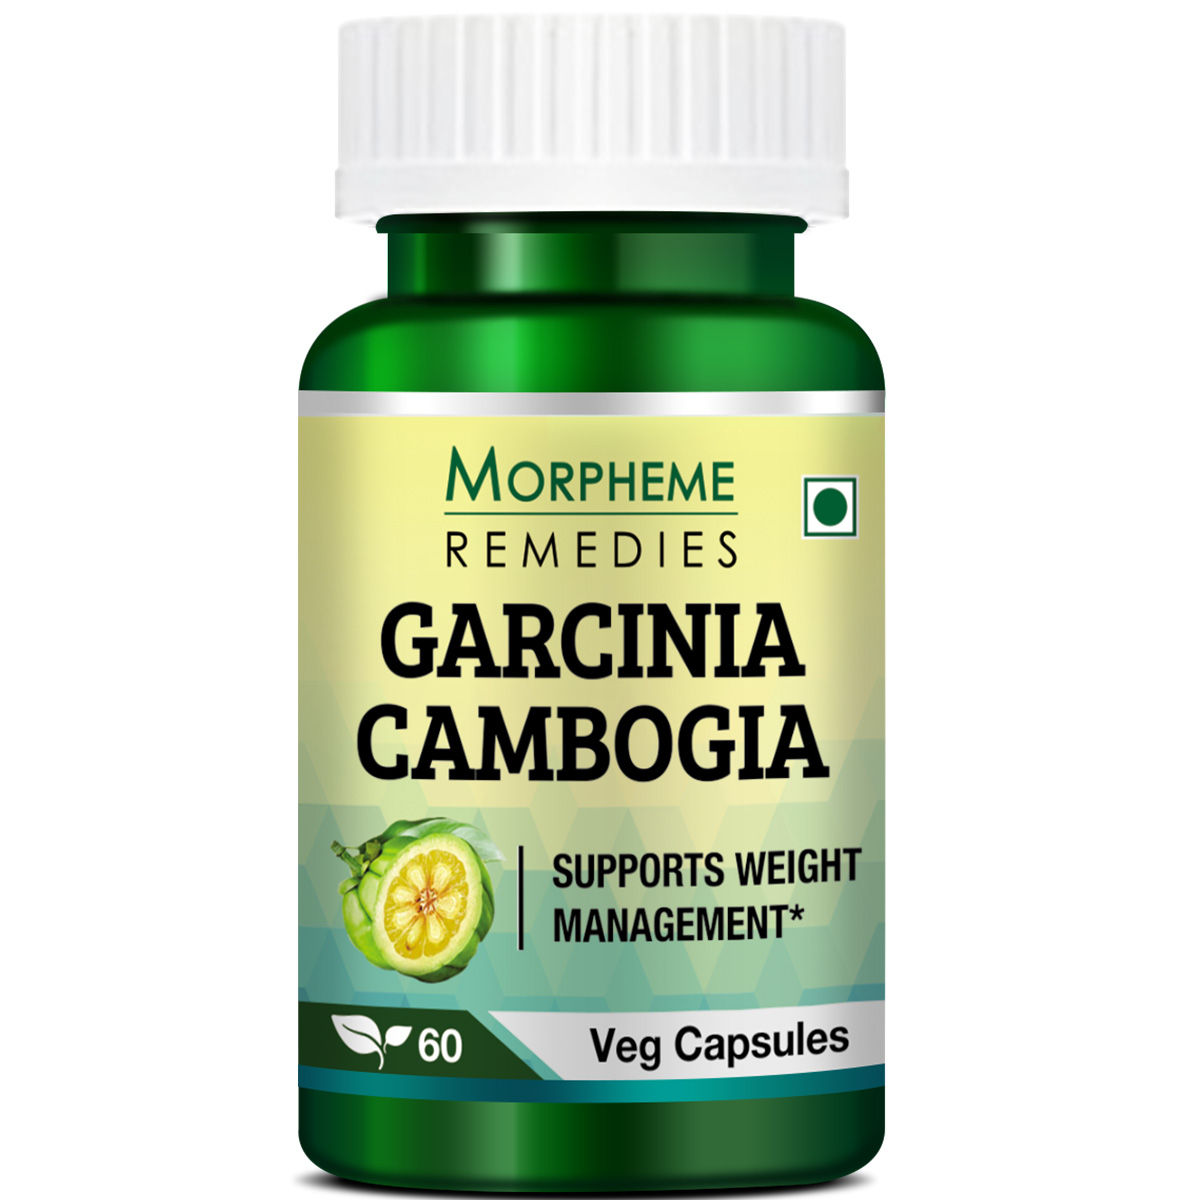 Morpheme Remedies Garcinia Cambogia for Weight